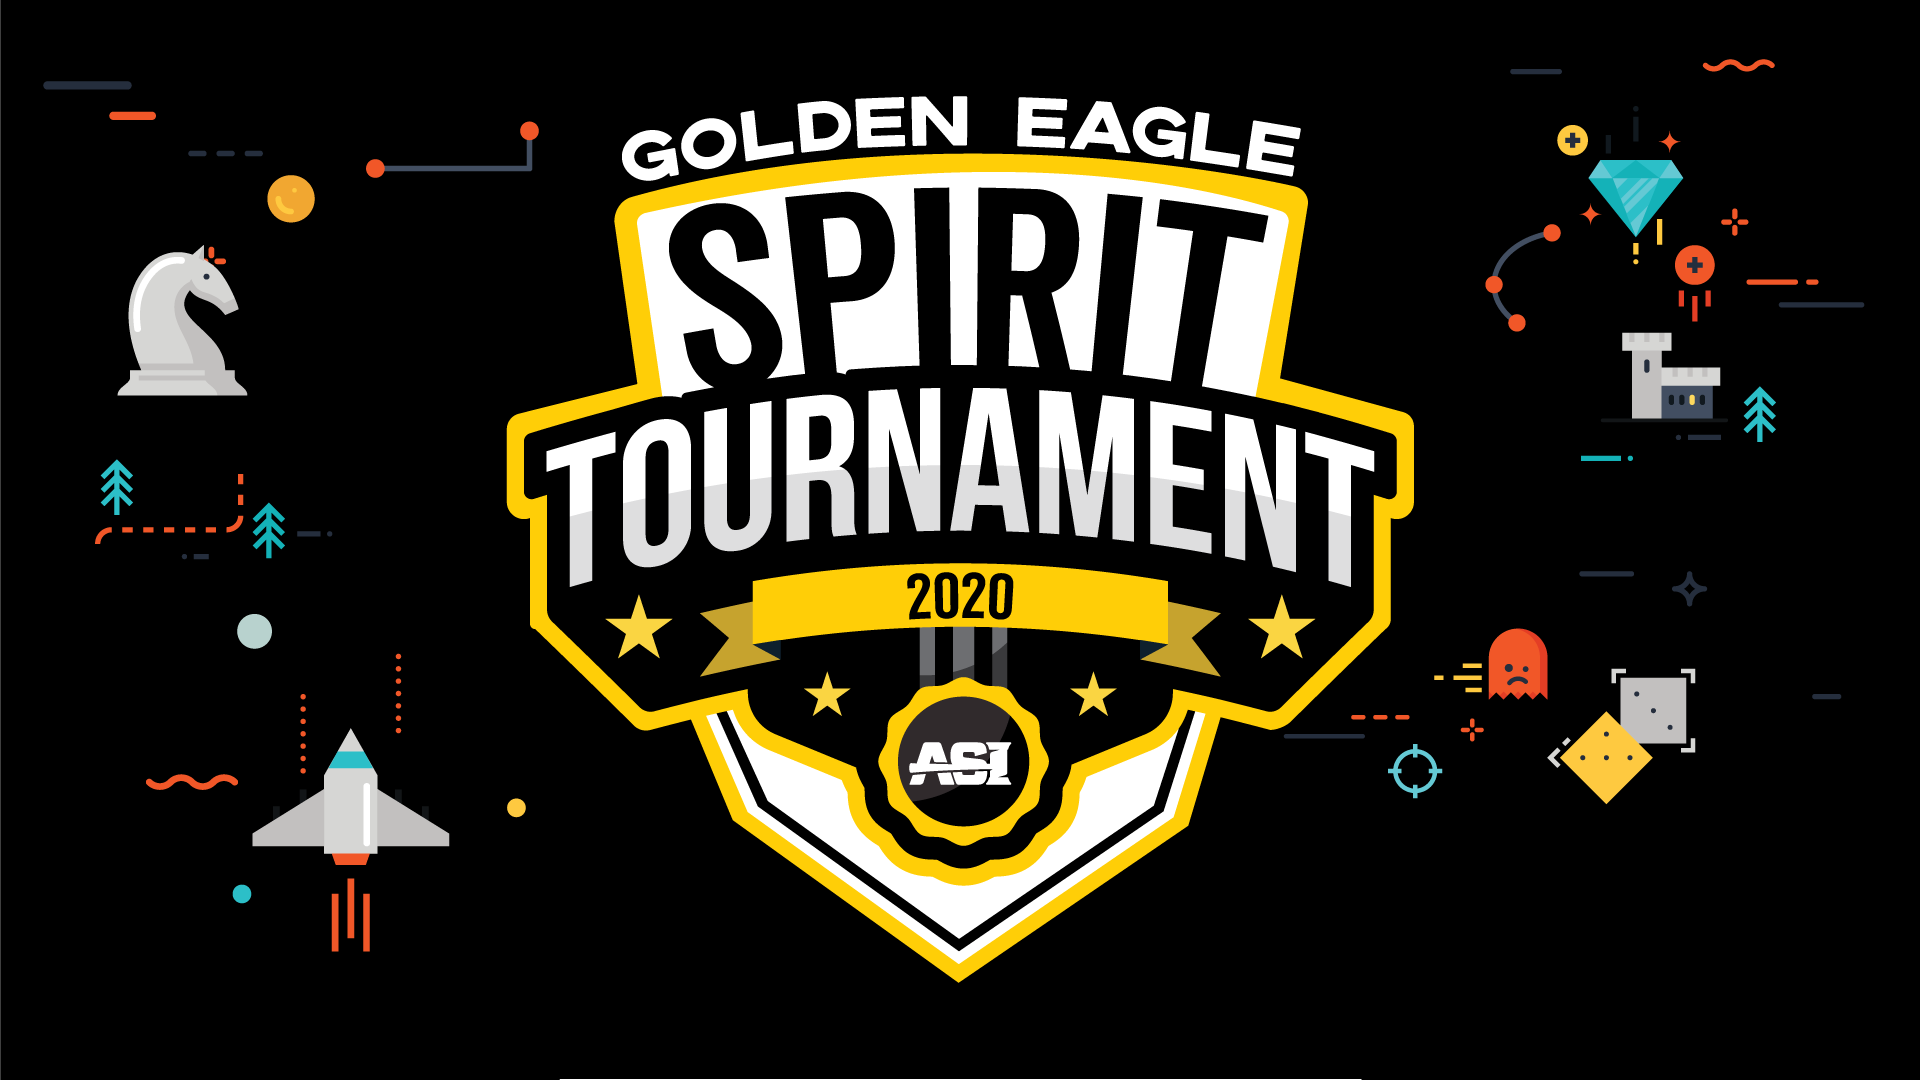 Golden Eagle Spirit Tournament 